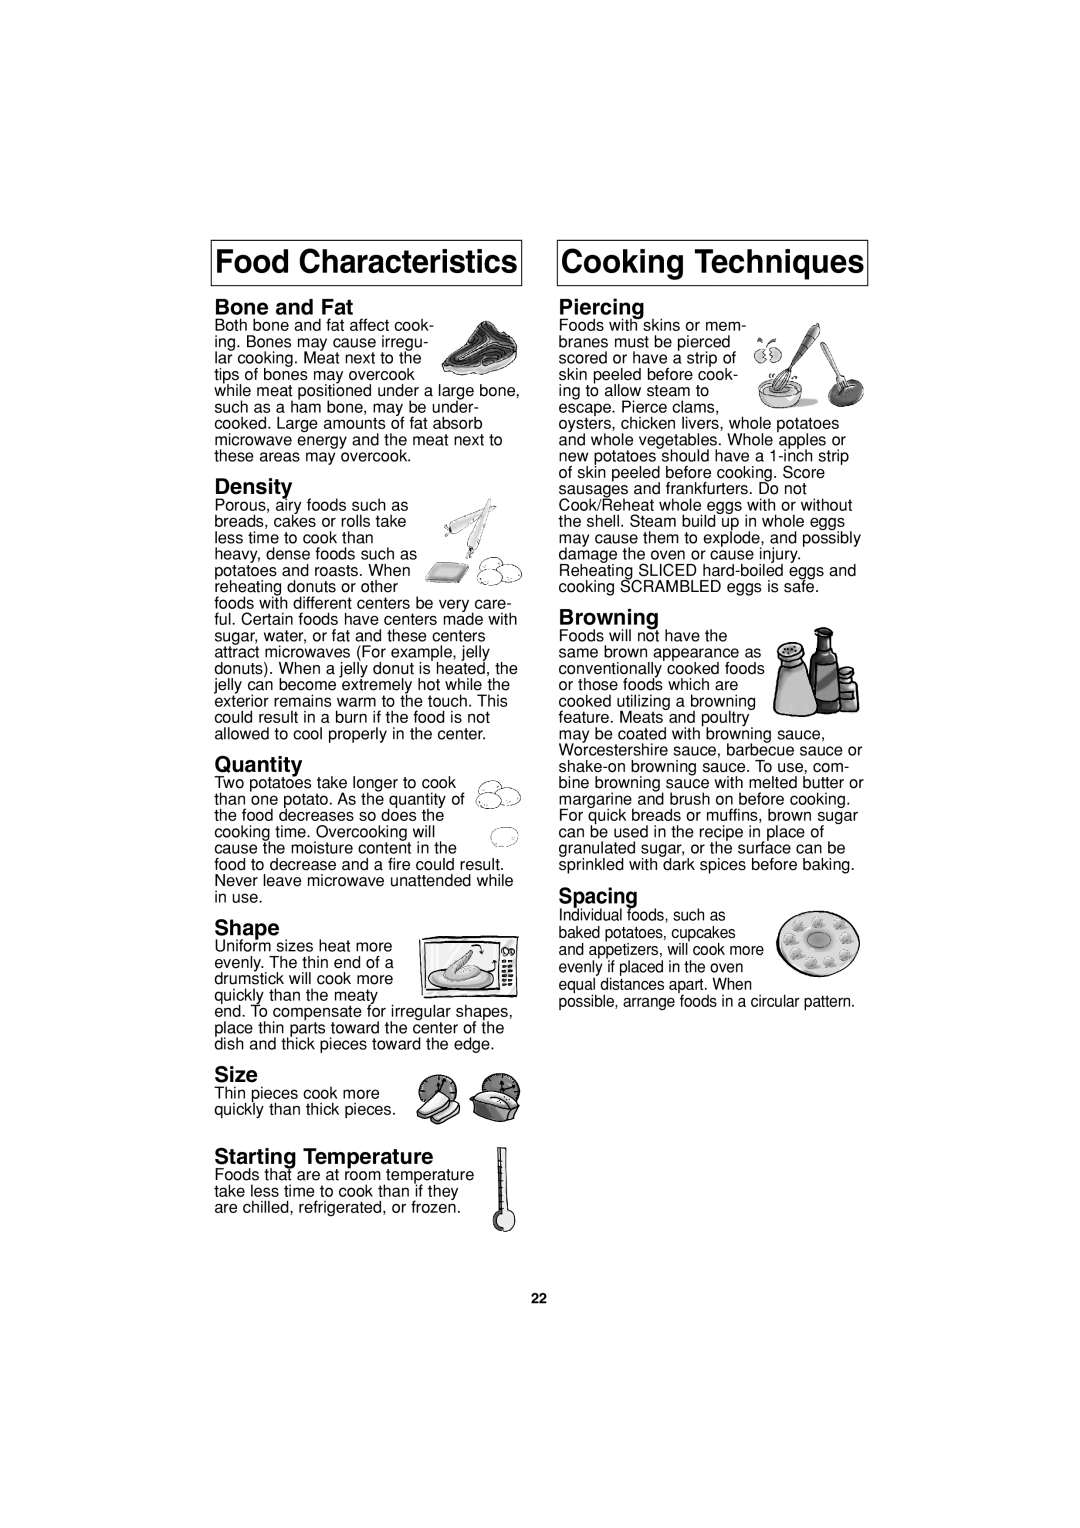 Panasonic NN-S763 Food Characteristics, Cooking Techniques, Bone and Fat, Density, Quantity, Shape, Size, Piercing 